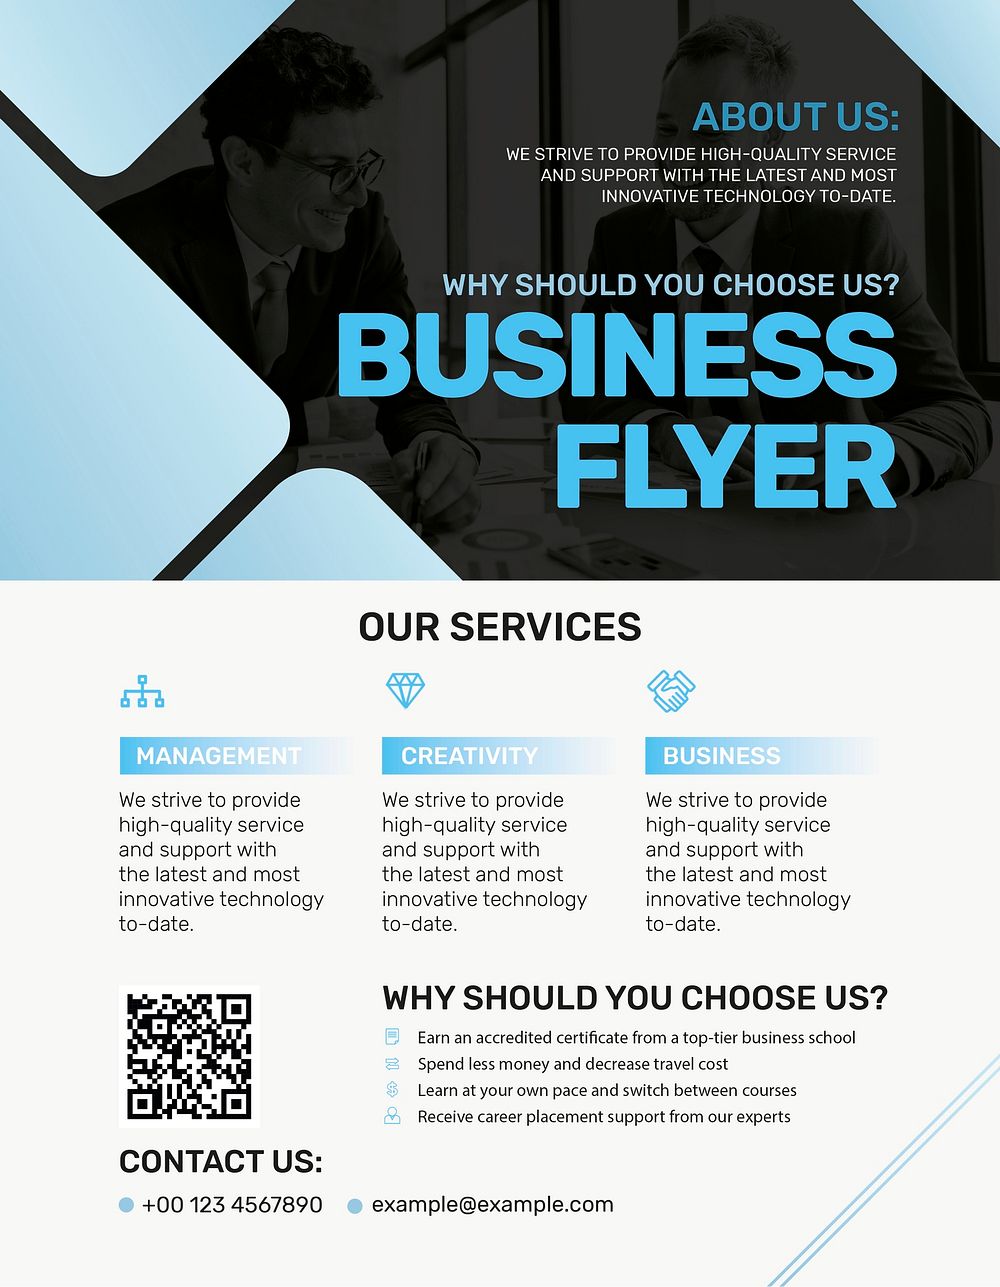 Blue business flyer template vector in modern design